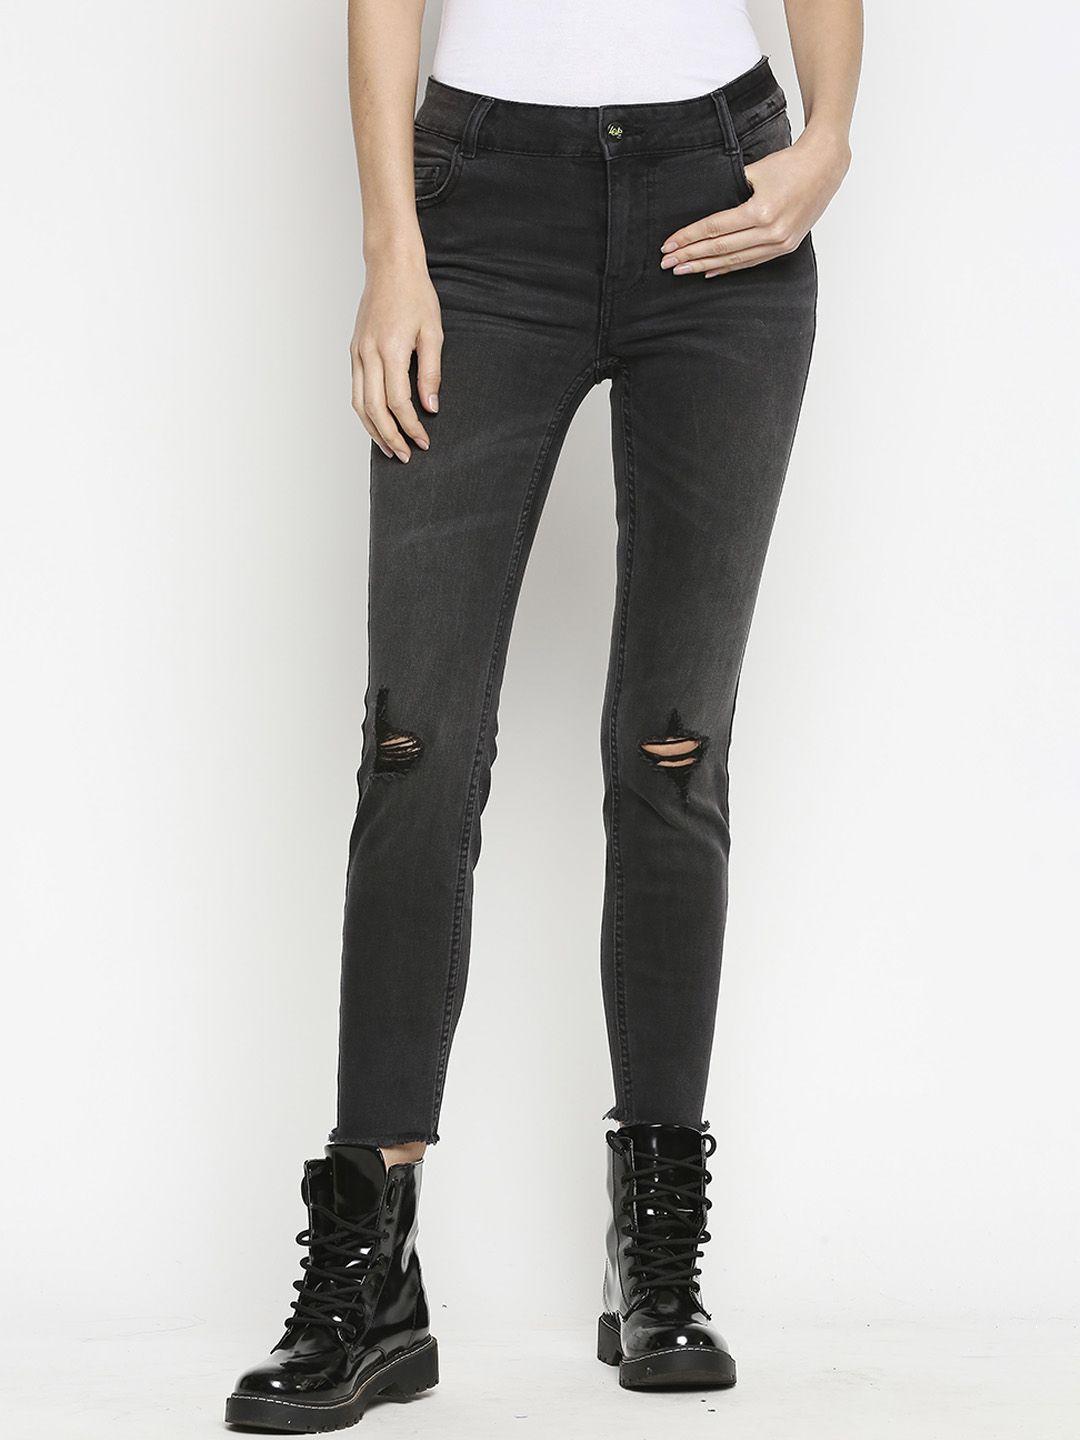 lovegen women black skinny fit mildly distressed light fade stretchable jeans